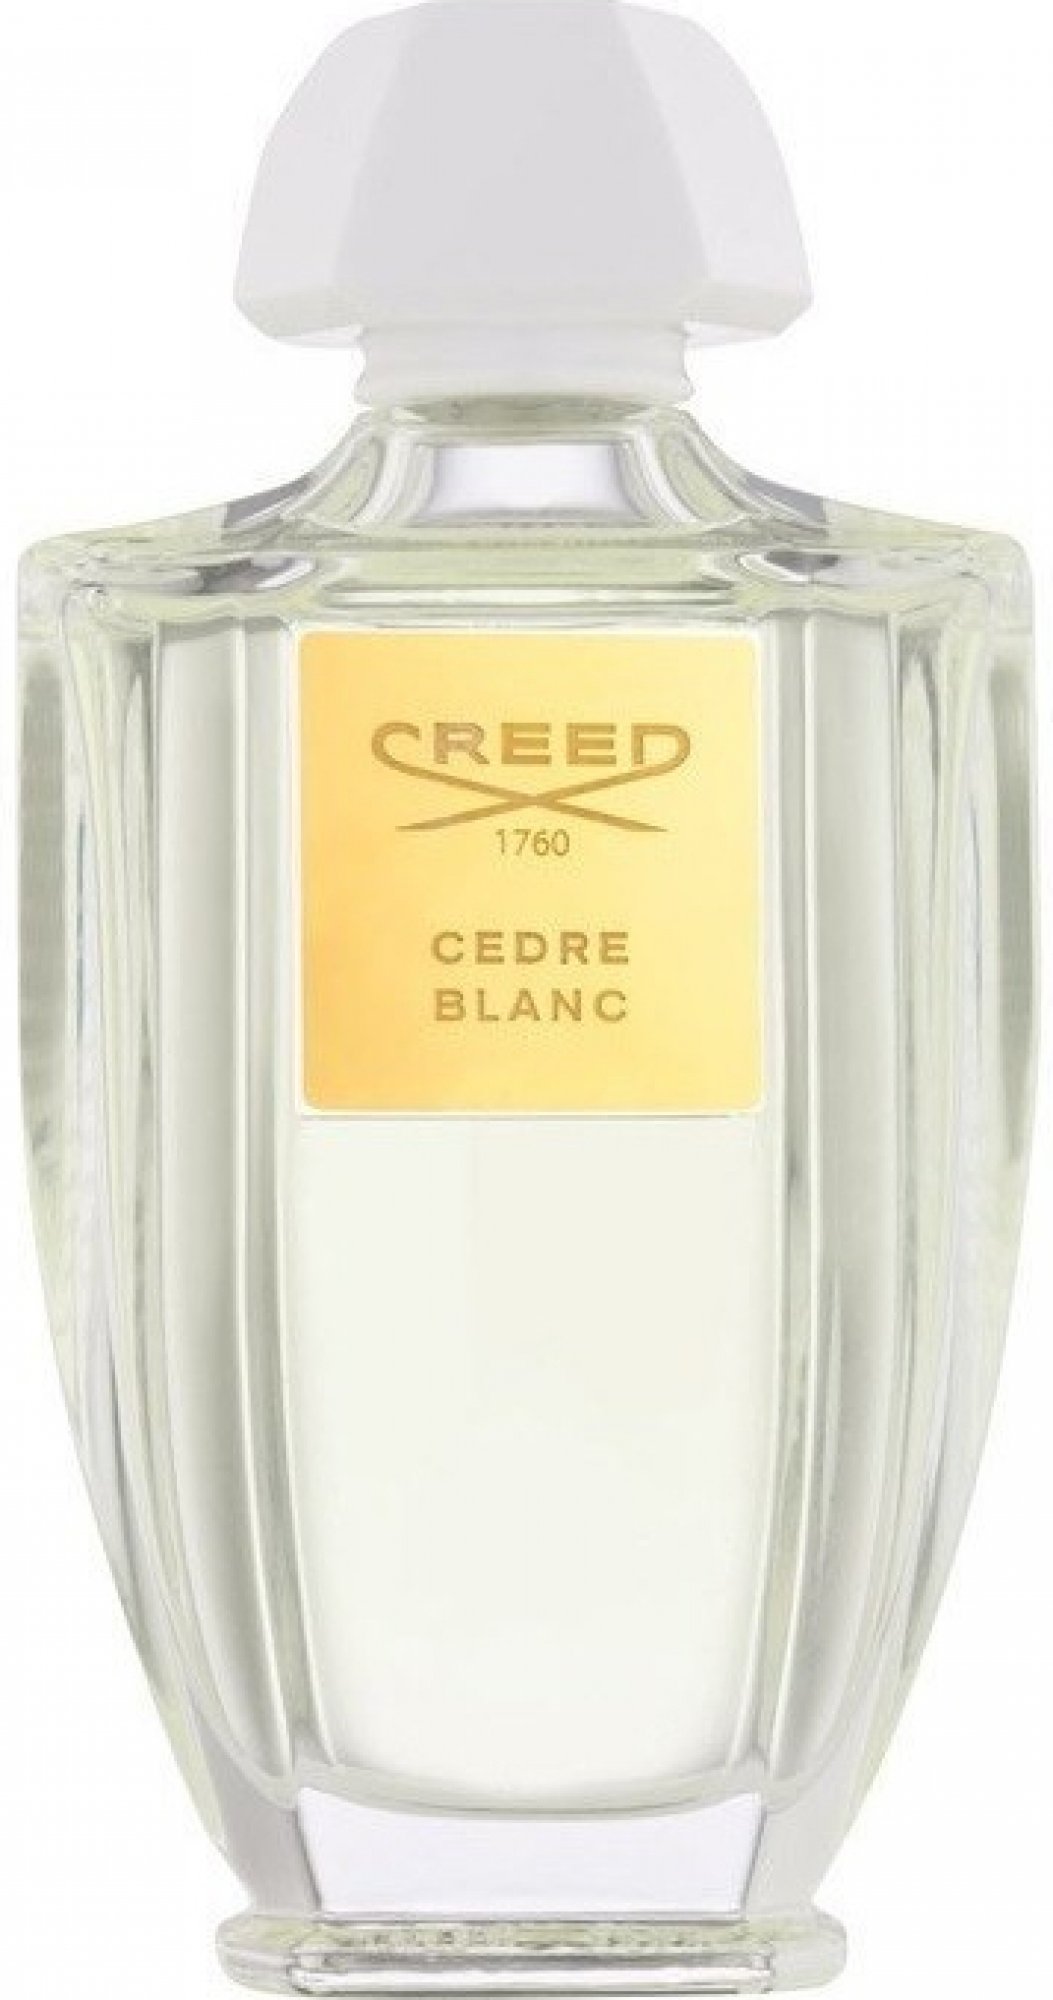 Creed Cedre Blanc, edp 100ml - Teszter